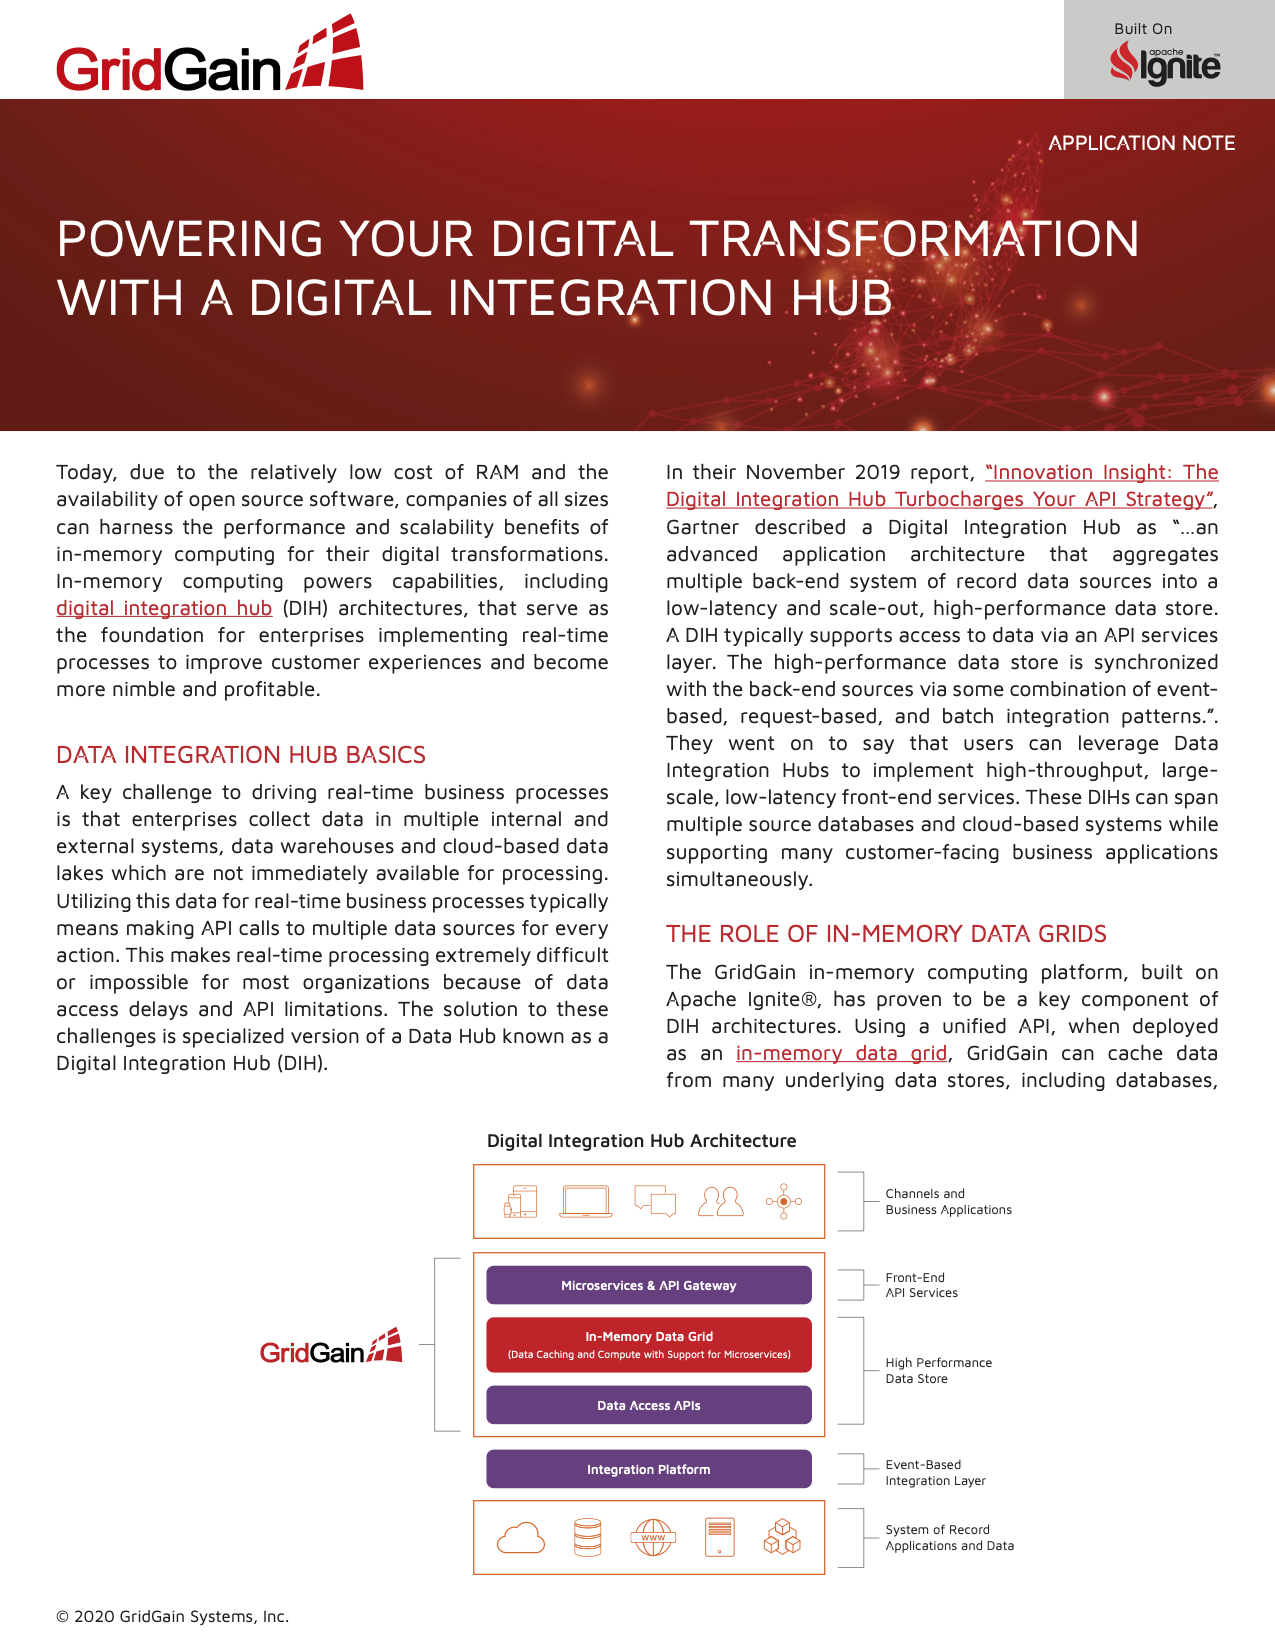 Powering Your Digital Transformation With a Digital Integration Hub